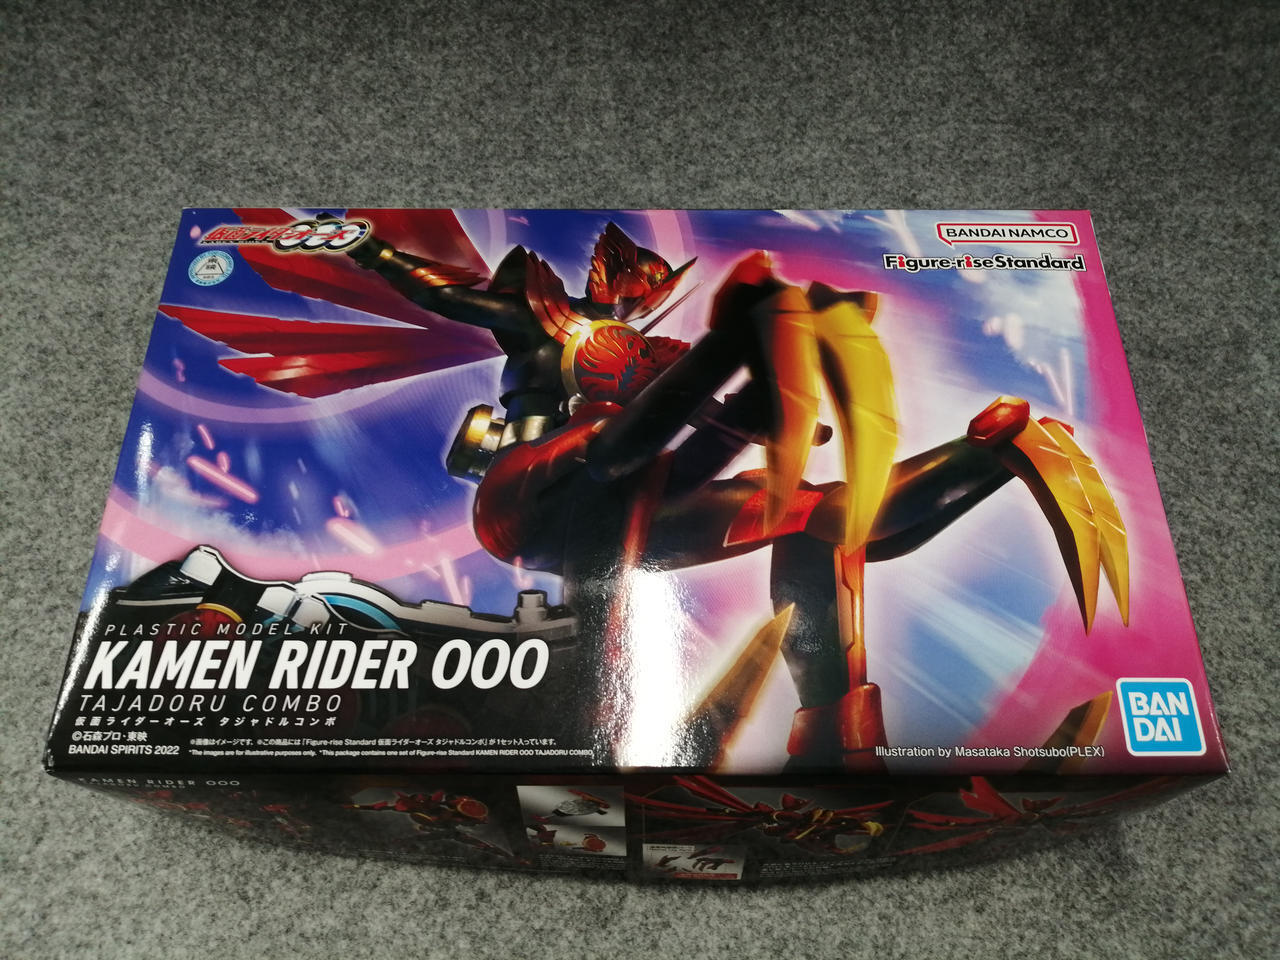 Bandai Spirits Figure-Rise Standard Kamen Rider Ooo plastic model Kit